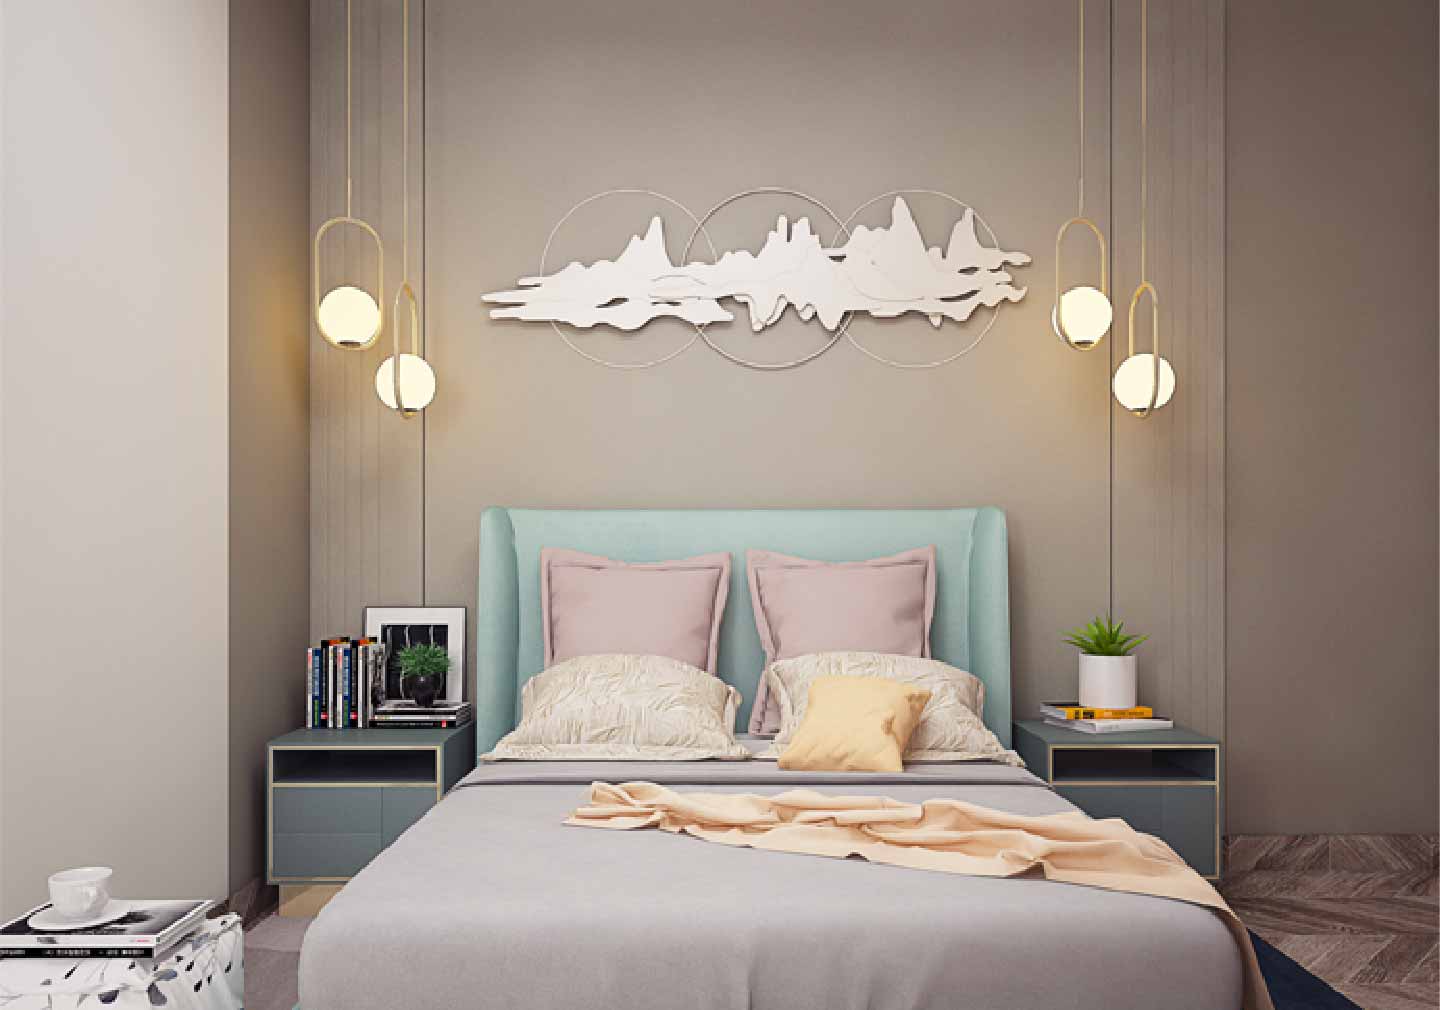 A Romantic Getaway - Bedroom Interior Design